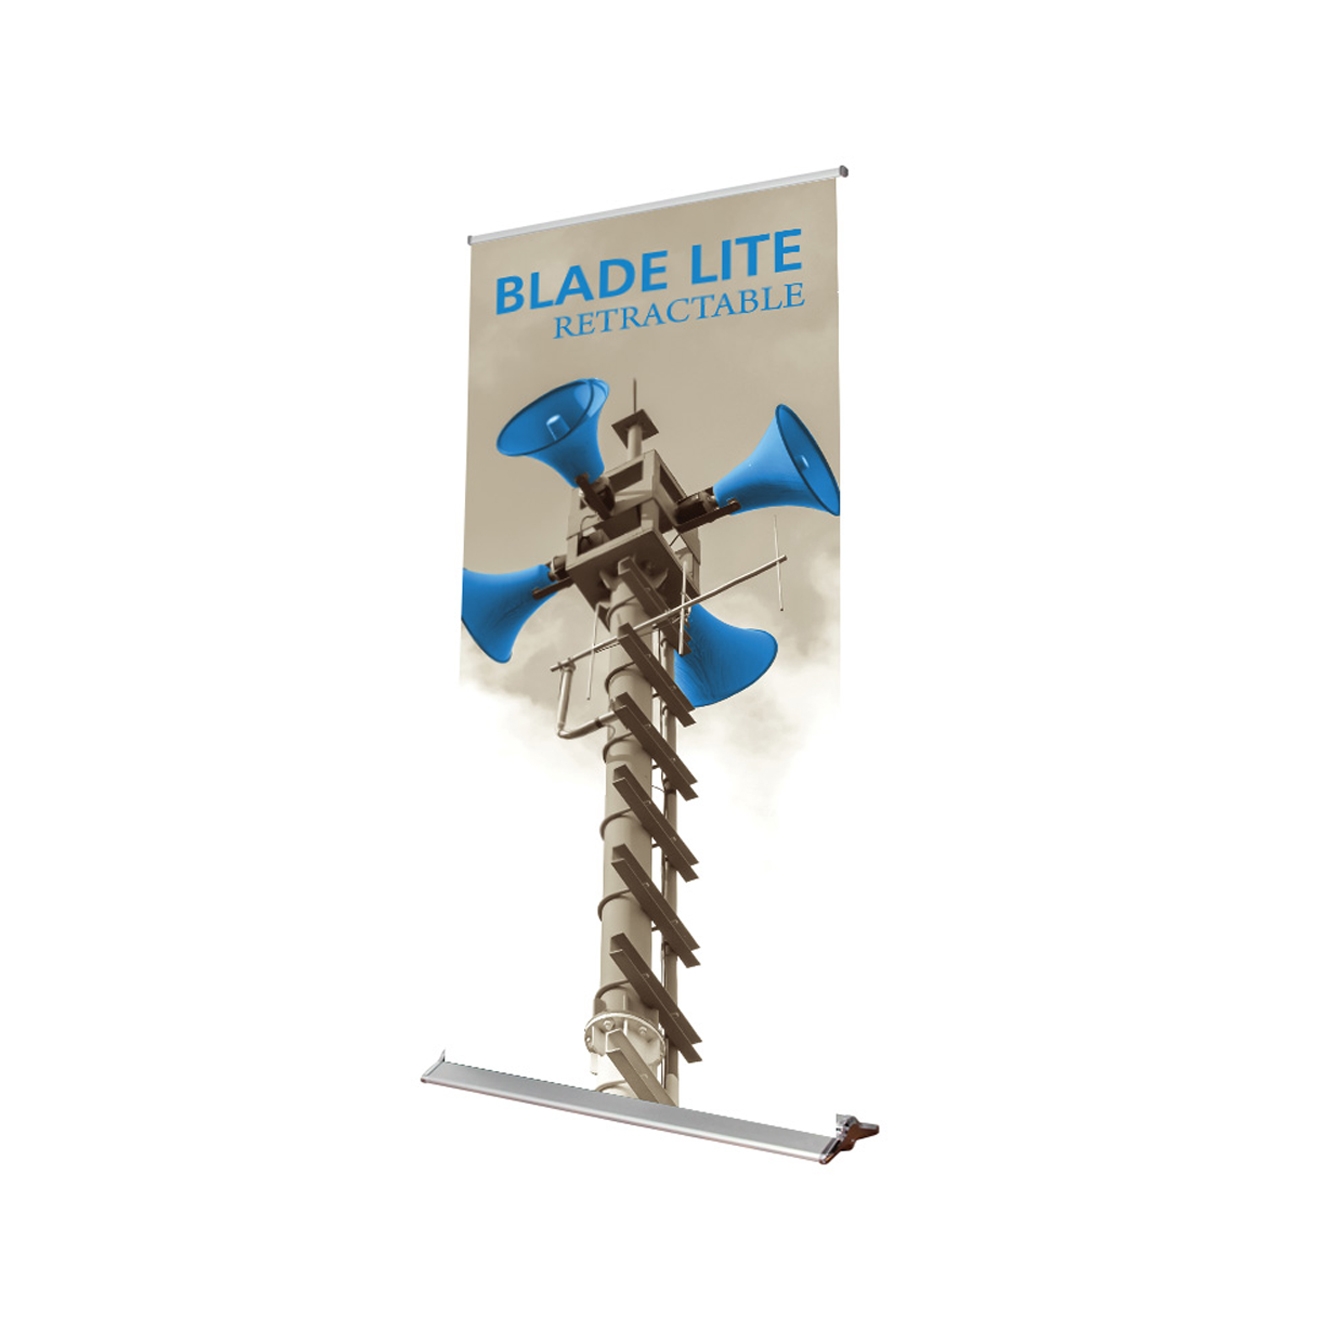 Blade Lite 1200